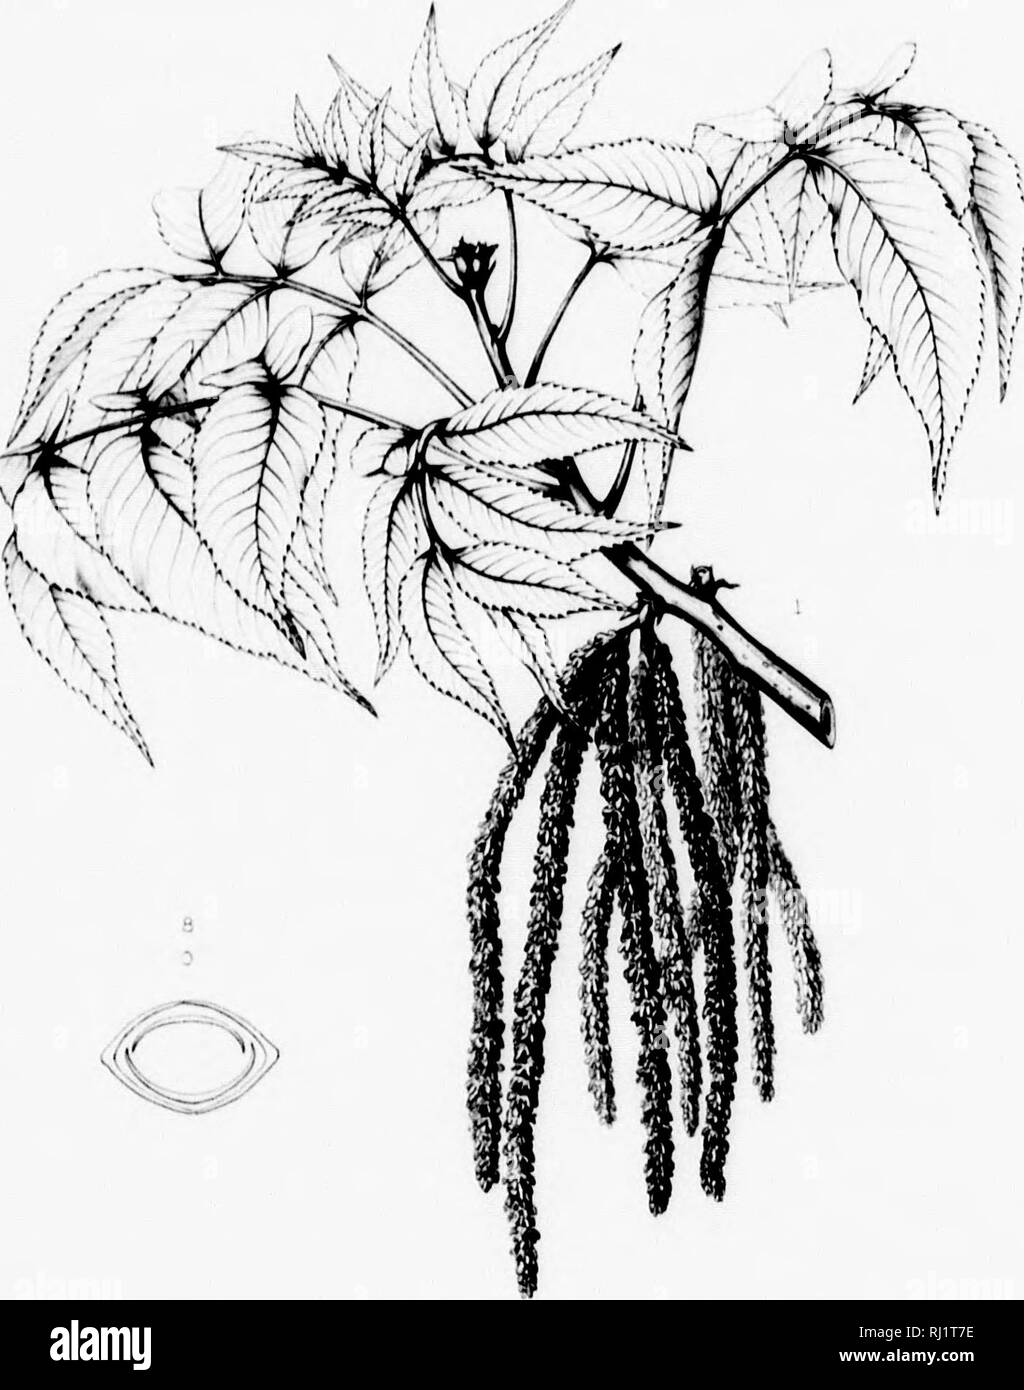 . The silva of North America [microform] : a description of the tree which grow naturally in North America exclusive of Mexico. Trees; Trees; Dicotyledons; Arbres; Arbres; DicotylÃ©dones. JUGLANDACEJJ. Silva nl M'Jtth Aiiii'iK a Tab. CCCXXXVIU Prinw â¢! Kituihiiii,', NfÂ» kii iltN-'H not Â»t'r&gt;tu It' IiaÂ«u lor*' 170V, Â«rhfÂ»a wÂ»tuÂ» uf -tnxUM Jnnn lUc MiÂ«r.Â» jiuiil thirty niilt Â»ii&gt;i ill br wM III Knjitx&quot;) ' 737).. C E Fita^-i litM r- 0)) t; HICORIA PECAN, t'li'.t JitfKeXU i A Ht.'^^fn.^ Jtr.u- ' .'&quot;U&quot; . :r-,-r,r .â ,/.-,.. ^. Please note that these images are extrac Stock Photo